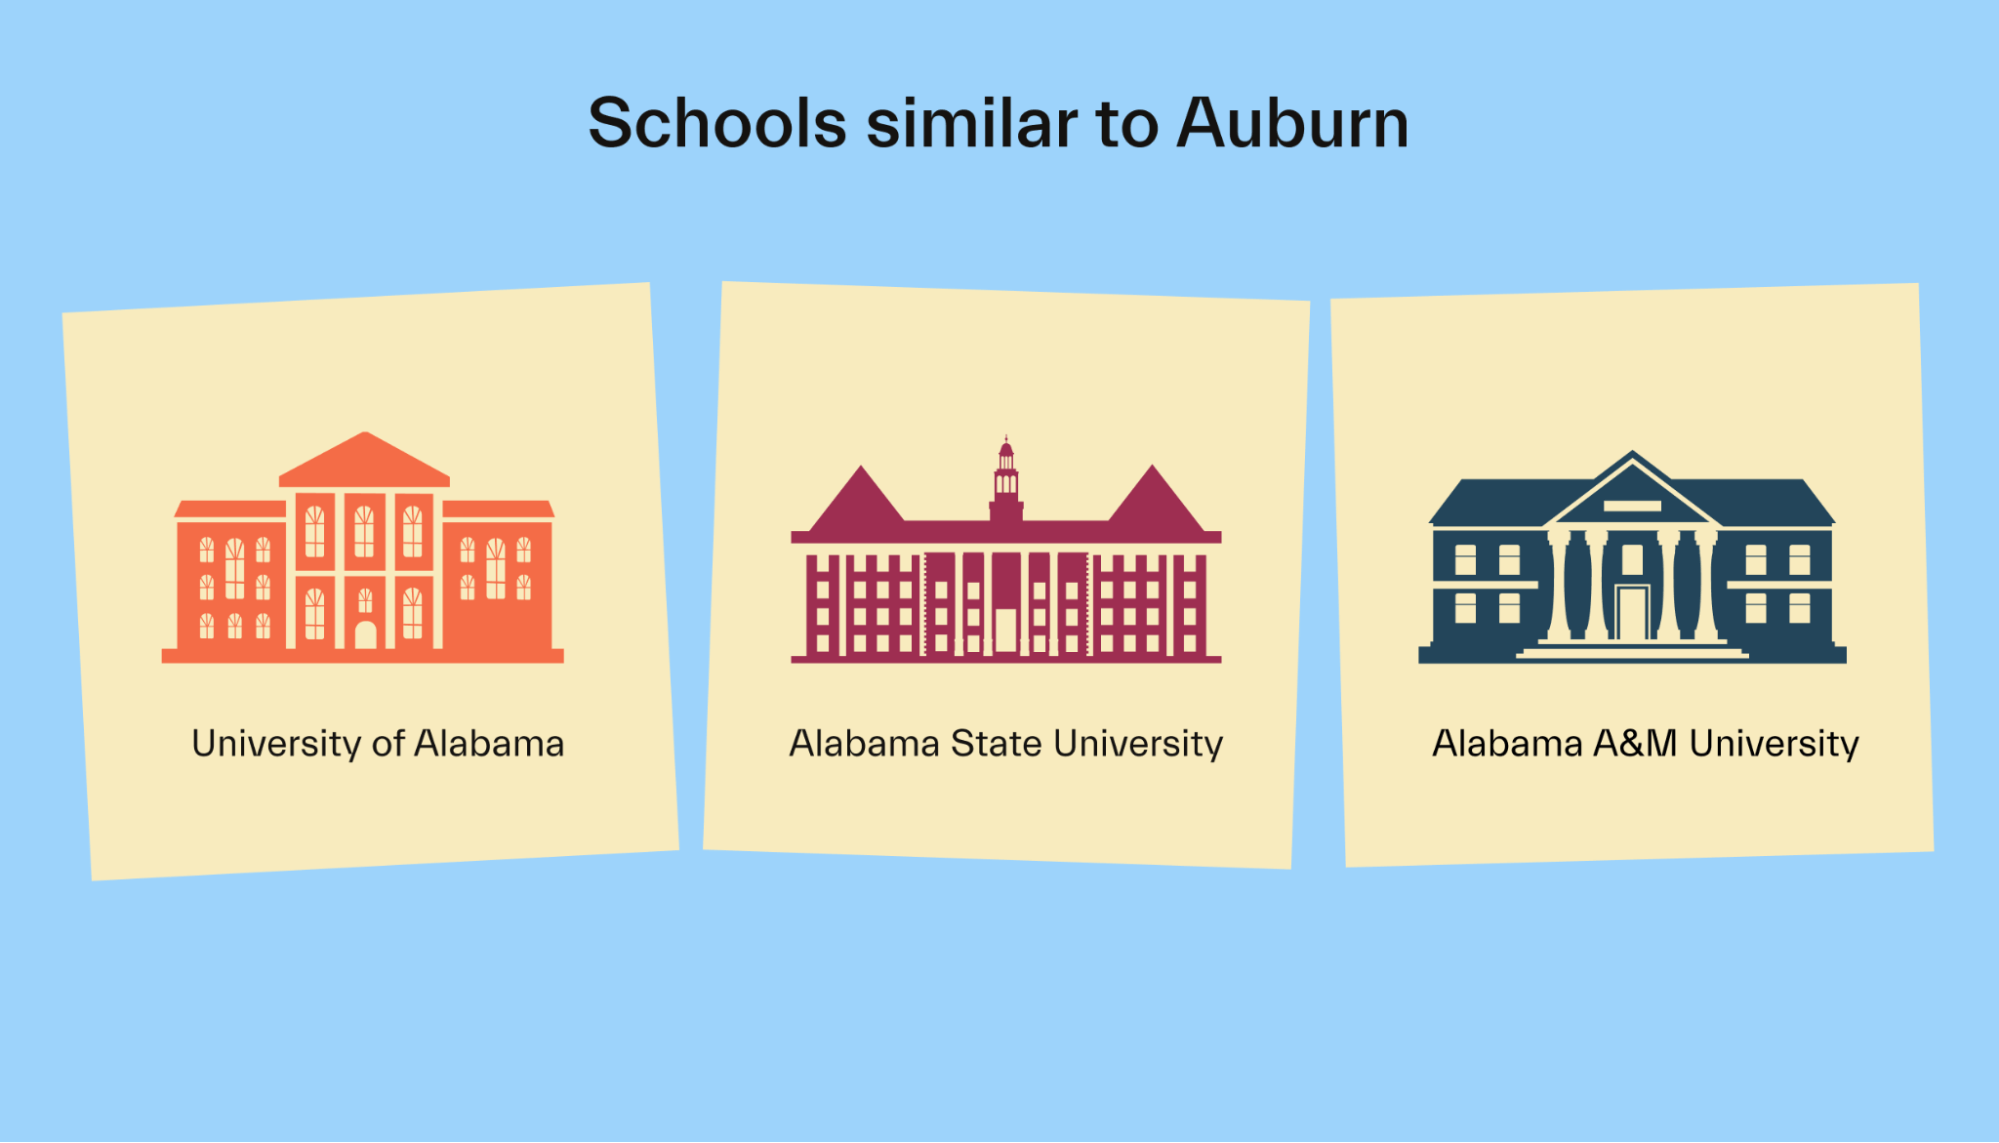 Other schools like Auburn University